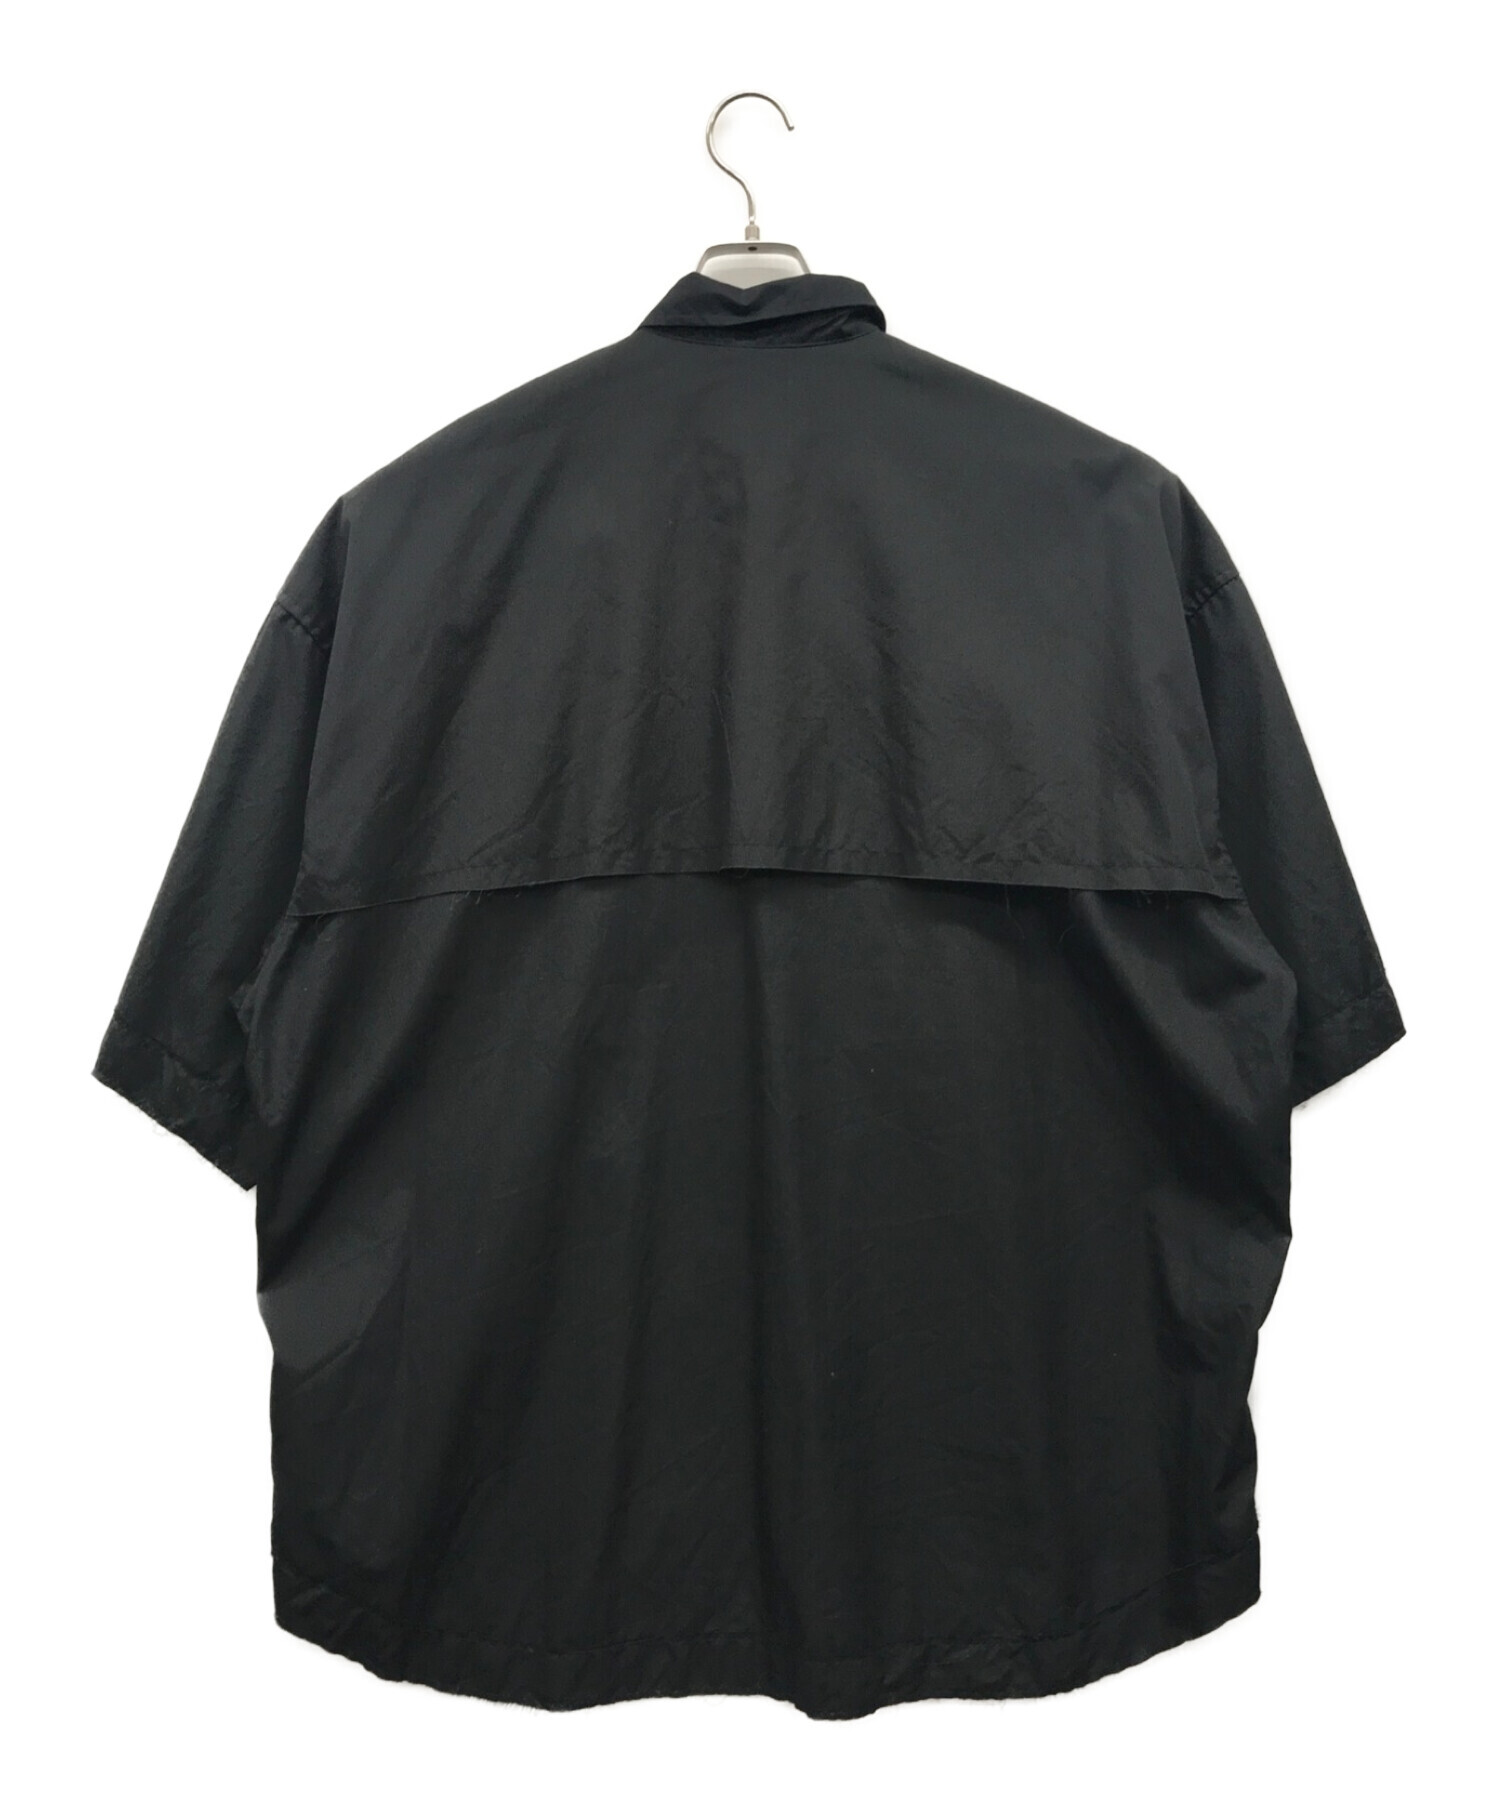 MAISON SPECIAL (メゾンスペシャル) インサイドアウトプライムオーバーショートスリーブシャツ ブラック サイズ:2